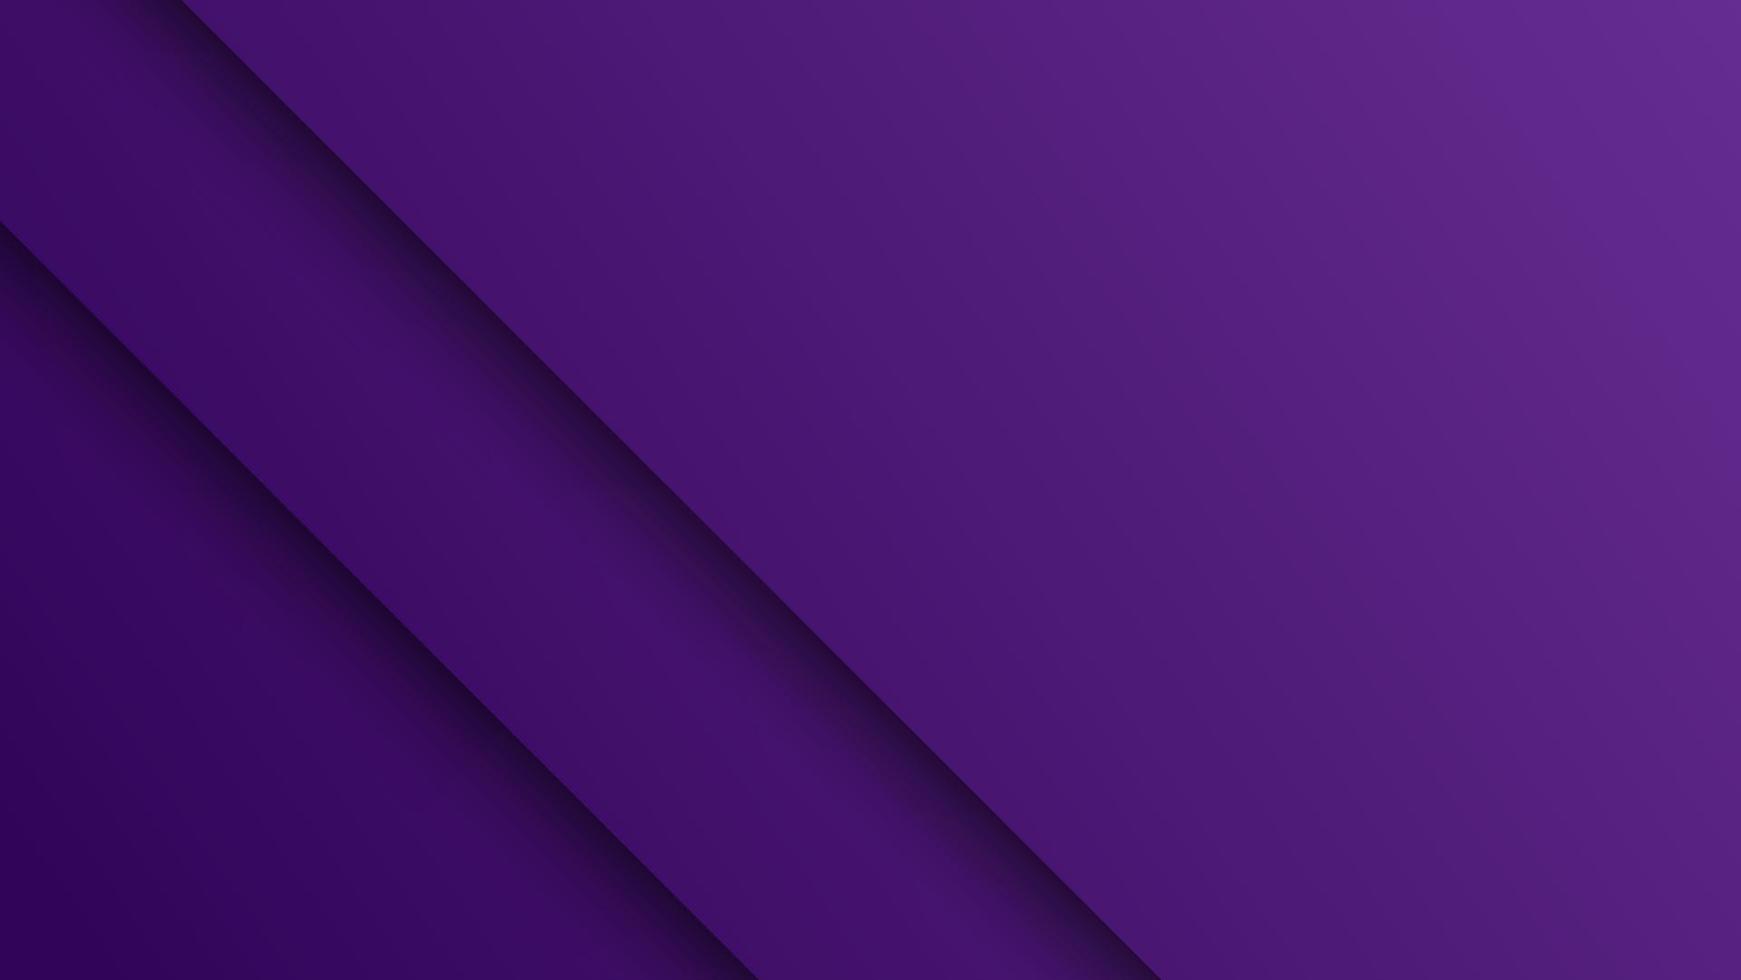 Fondo de patrón geométrico de color púrpura degradado moderno abstracto vector